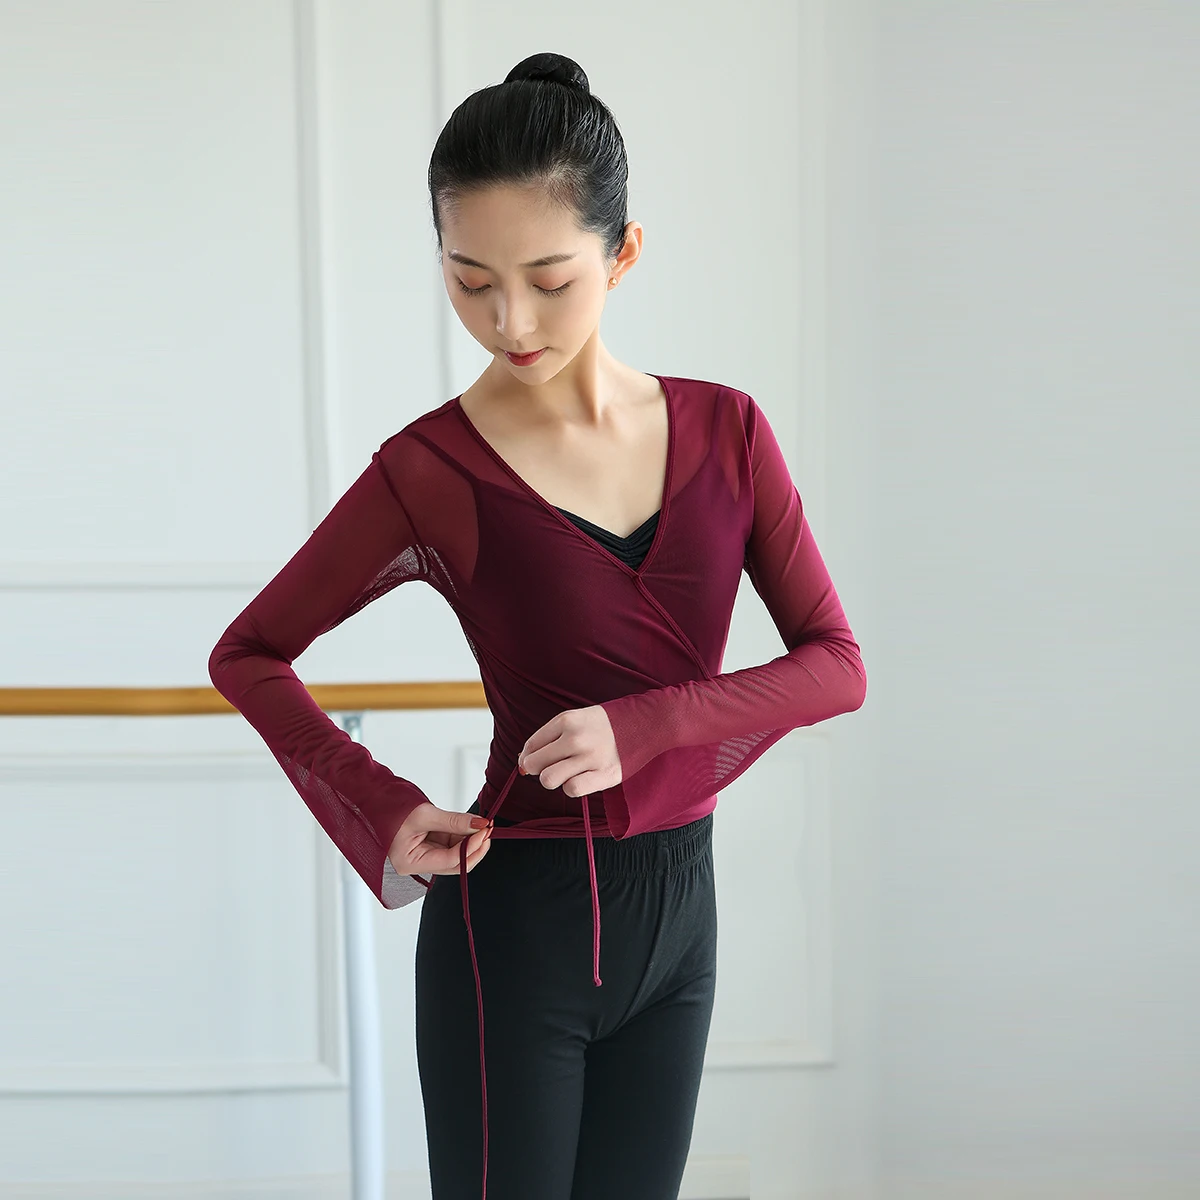 ACSUSS Kids Girls Classic Cotton Knit Wrap Tops Short Sleeve Ballet Dance Cardigan Dancing Dress Crop Tops Sweaters 